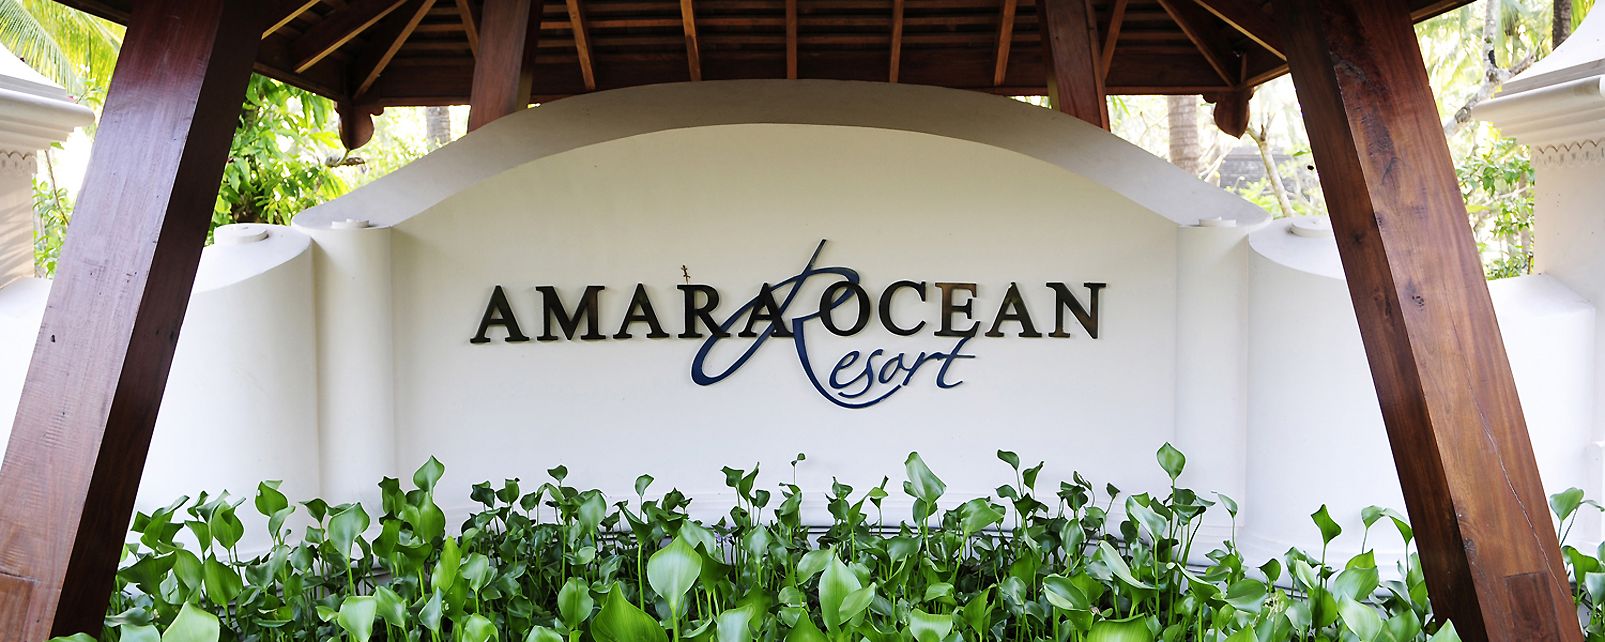 Hotel Amara Ocean Resort